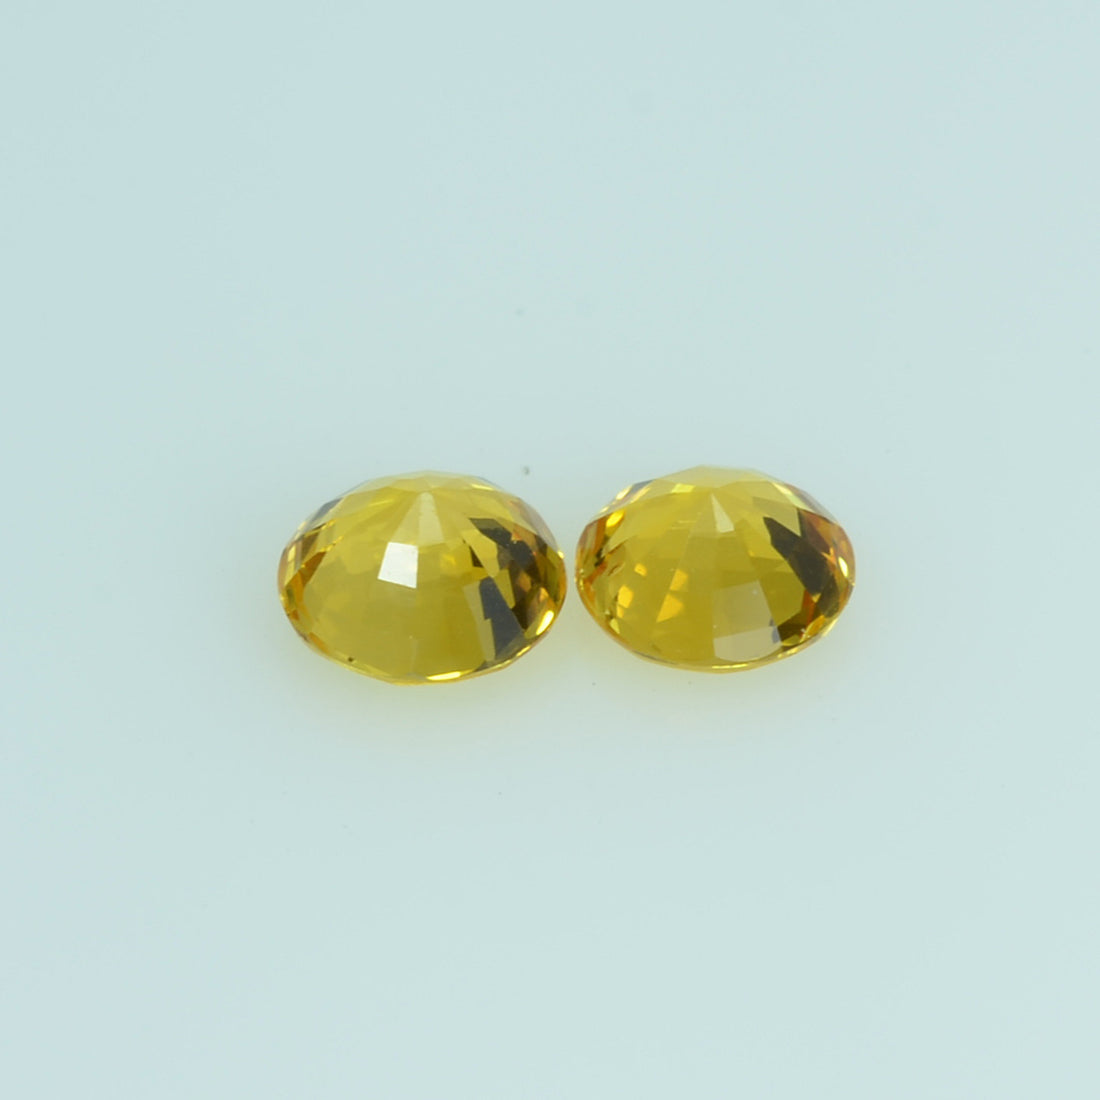 3.8 mm Natural Yellow Sapphire Loose Gemstone Round Cut - Thai Gems Export Ltd.